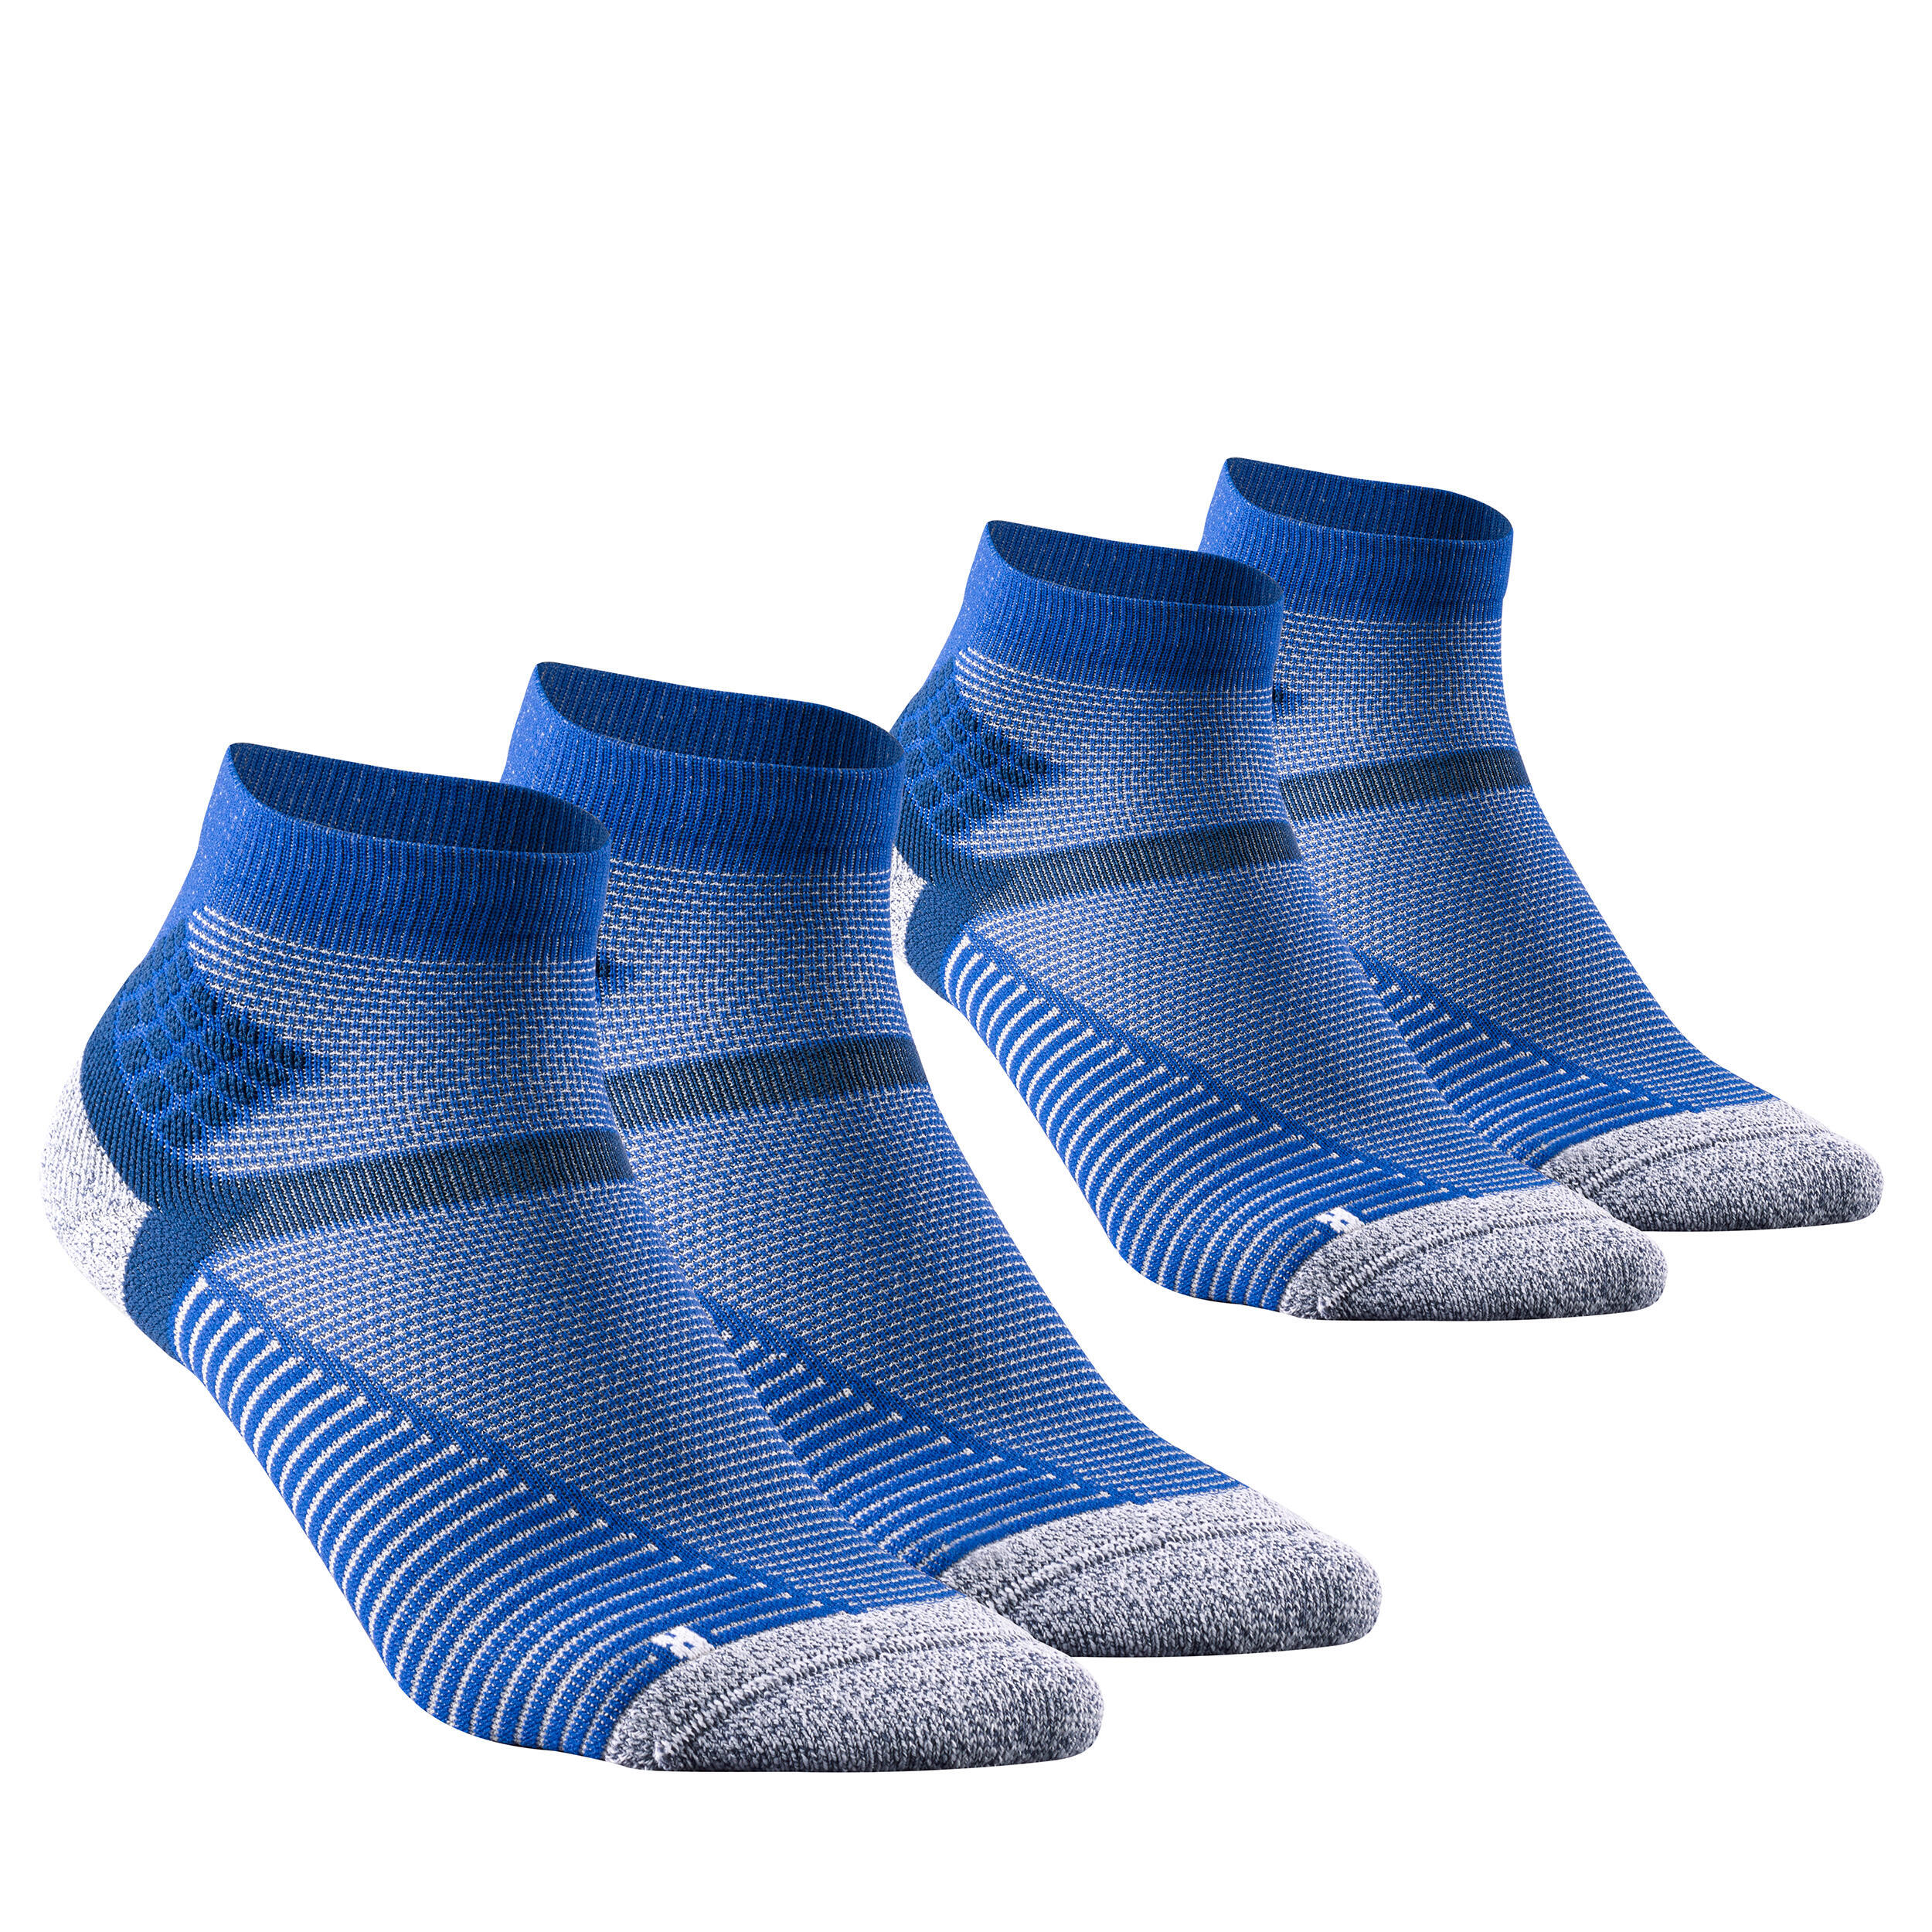 QUECHUA Hiking socks - MH500 Mid x2 pairs Blue Grey